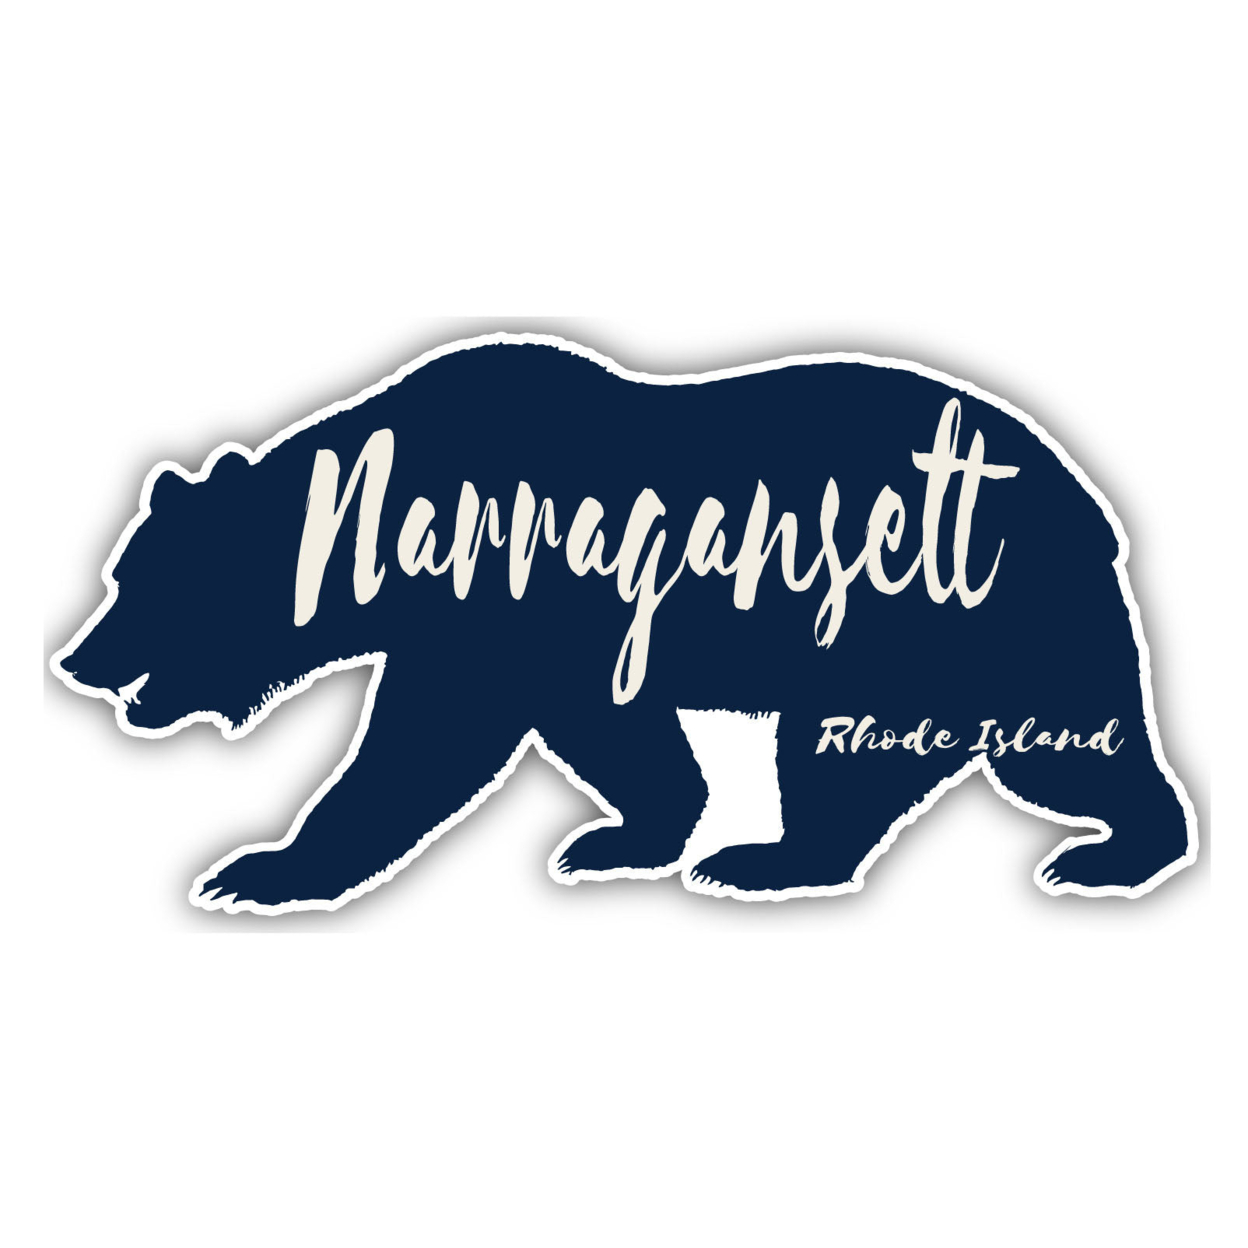 Narragansett Rhode Island Souvenir Decorative Stickers (Choose Theme And Size) - Single Unit, 4-Inch, Bear